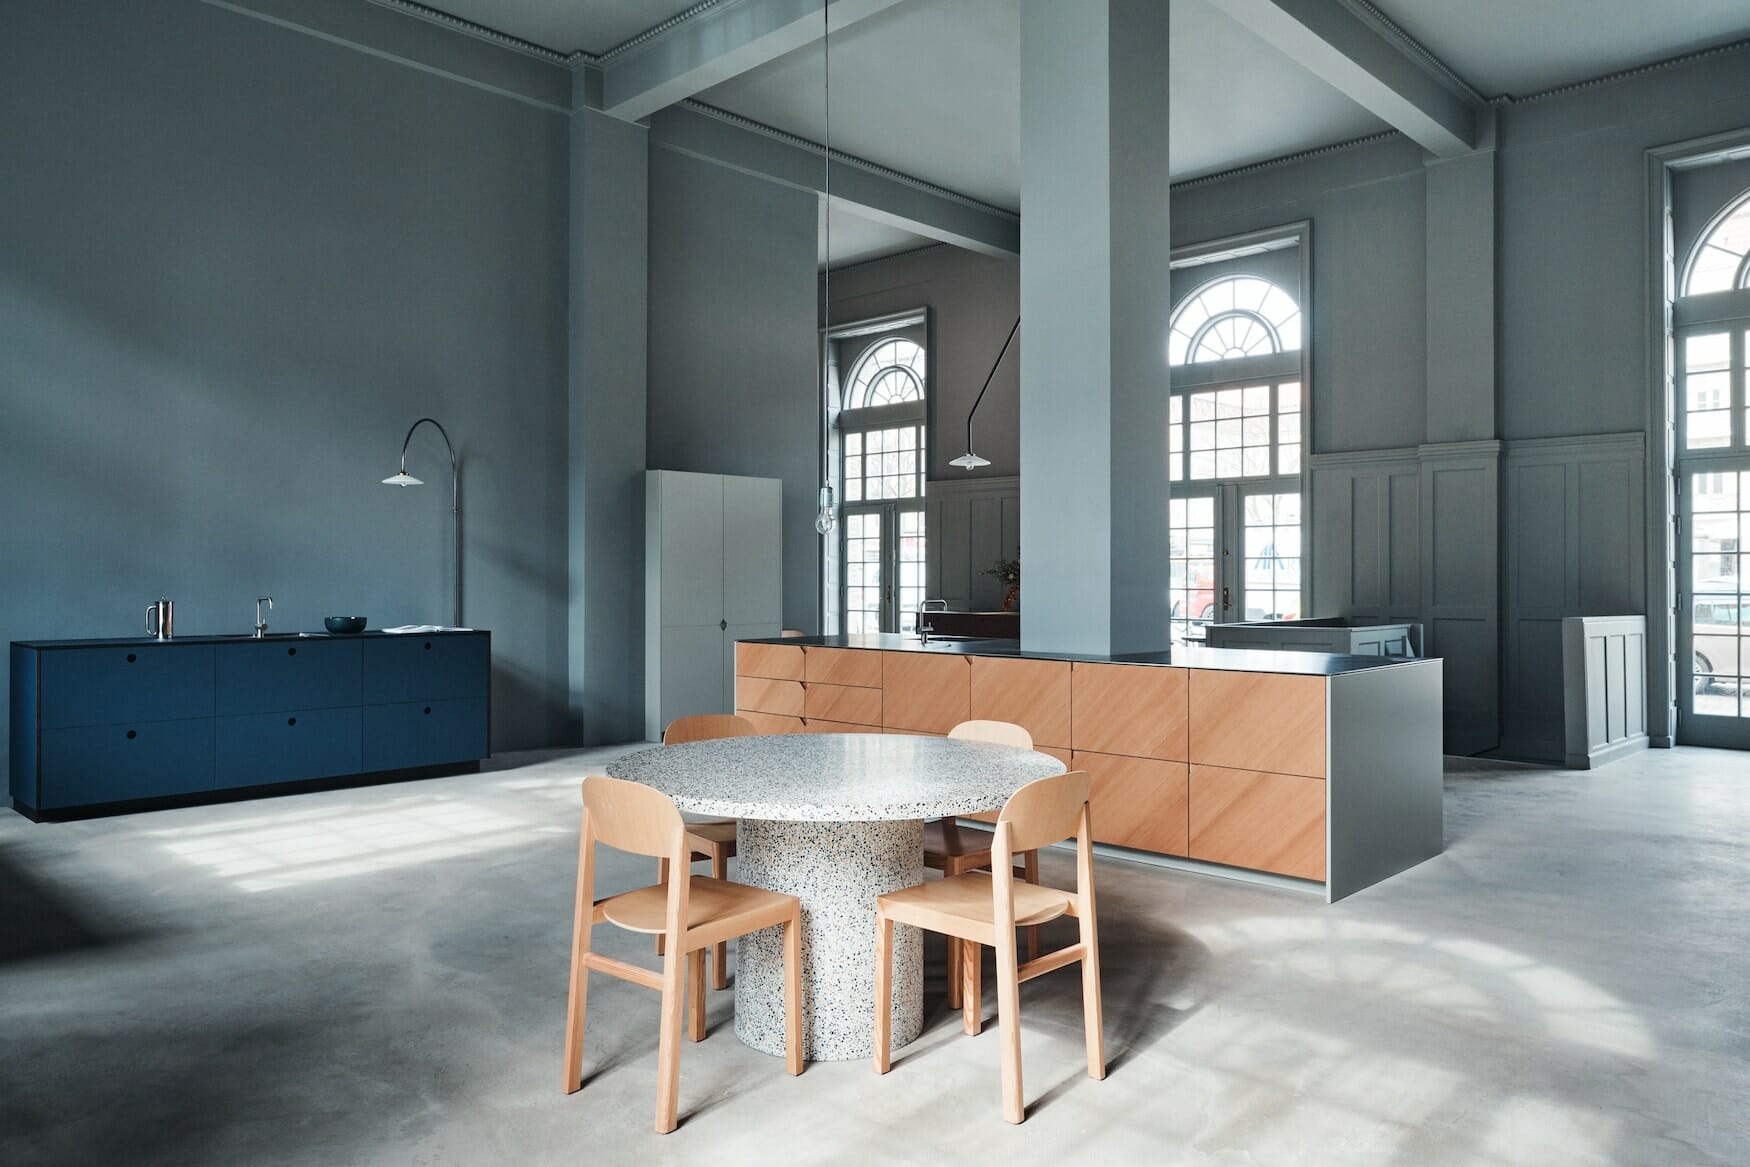 7 Best Tips for Creating Stunning Minimalist Interior Design - Decorilla